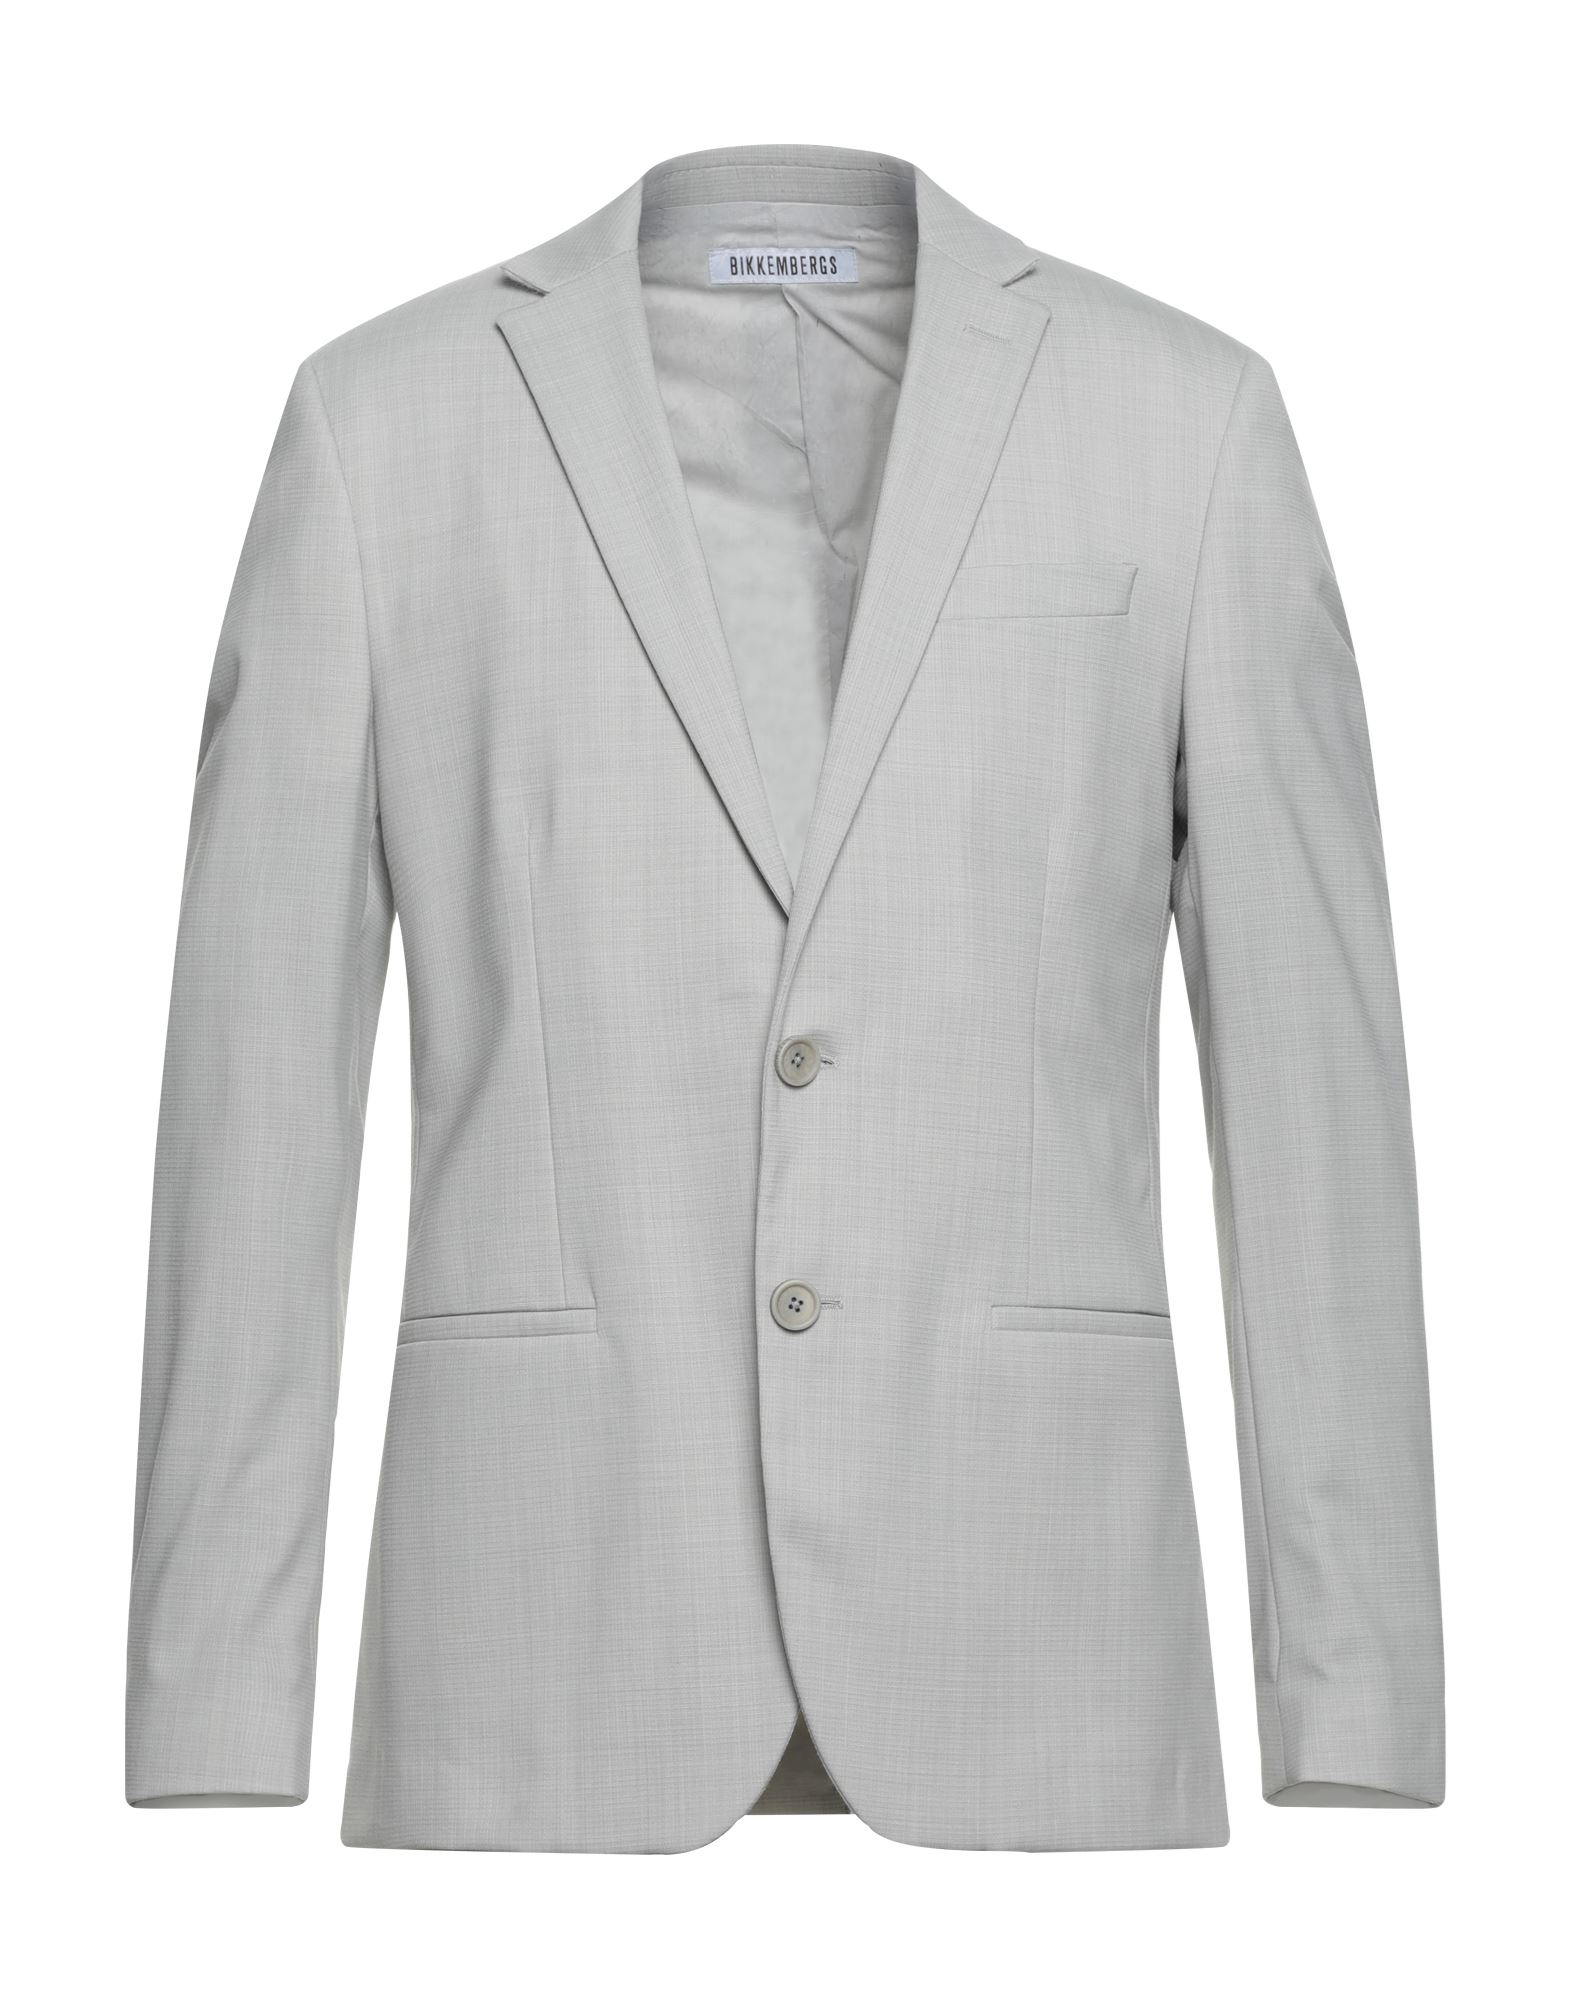 Bikkembergs Suit Jackets In Grey